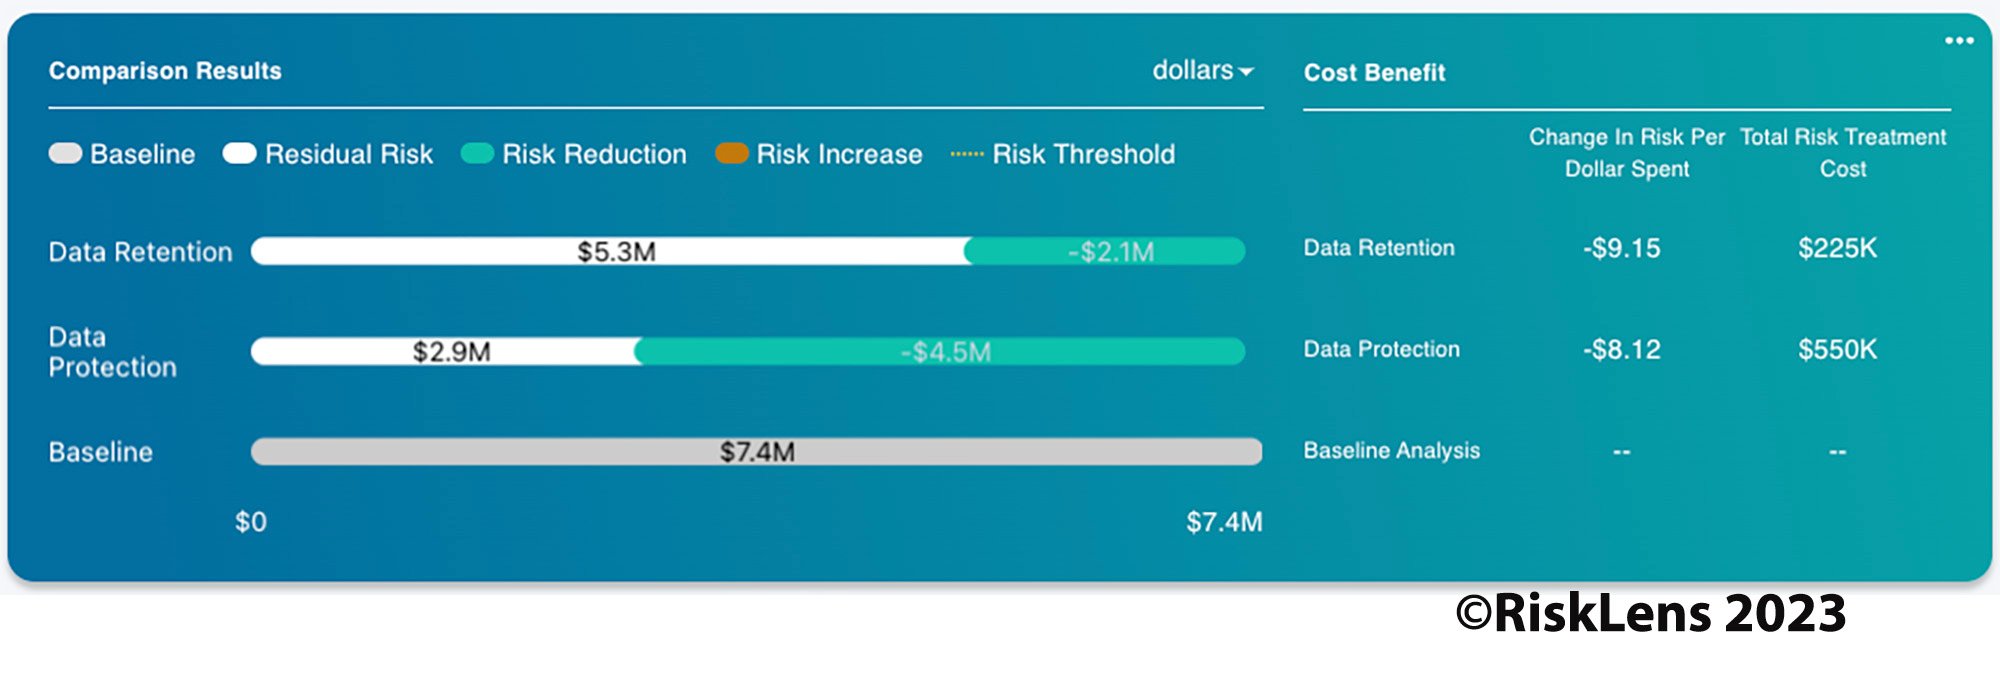 RiskLens Platform - Cost Benefit Analysis